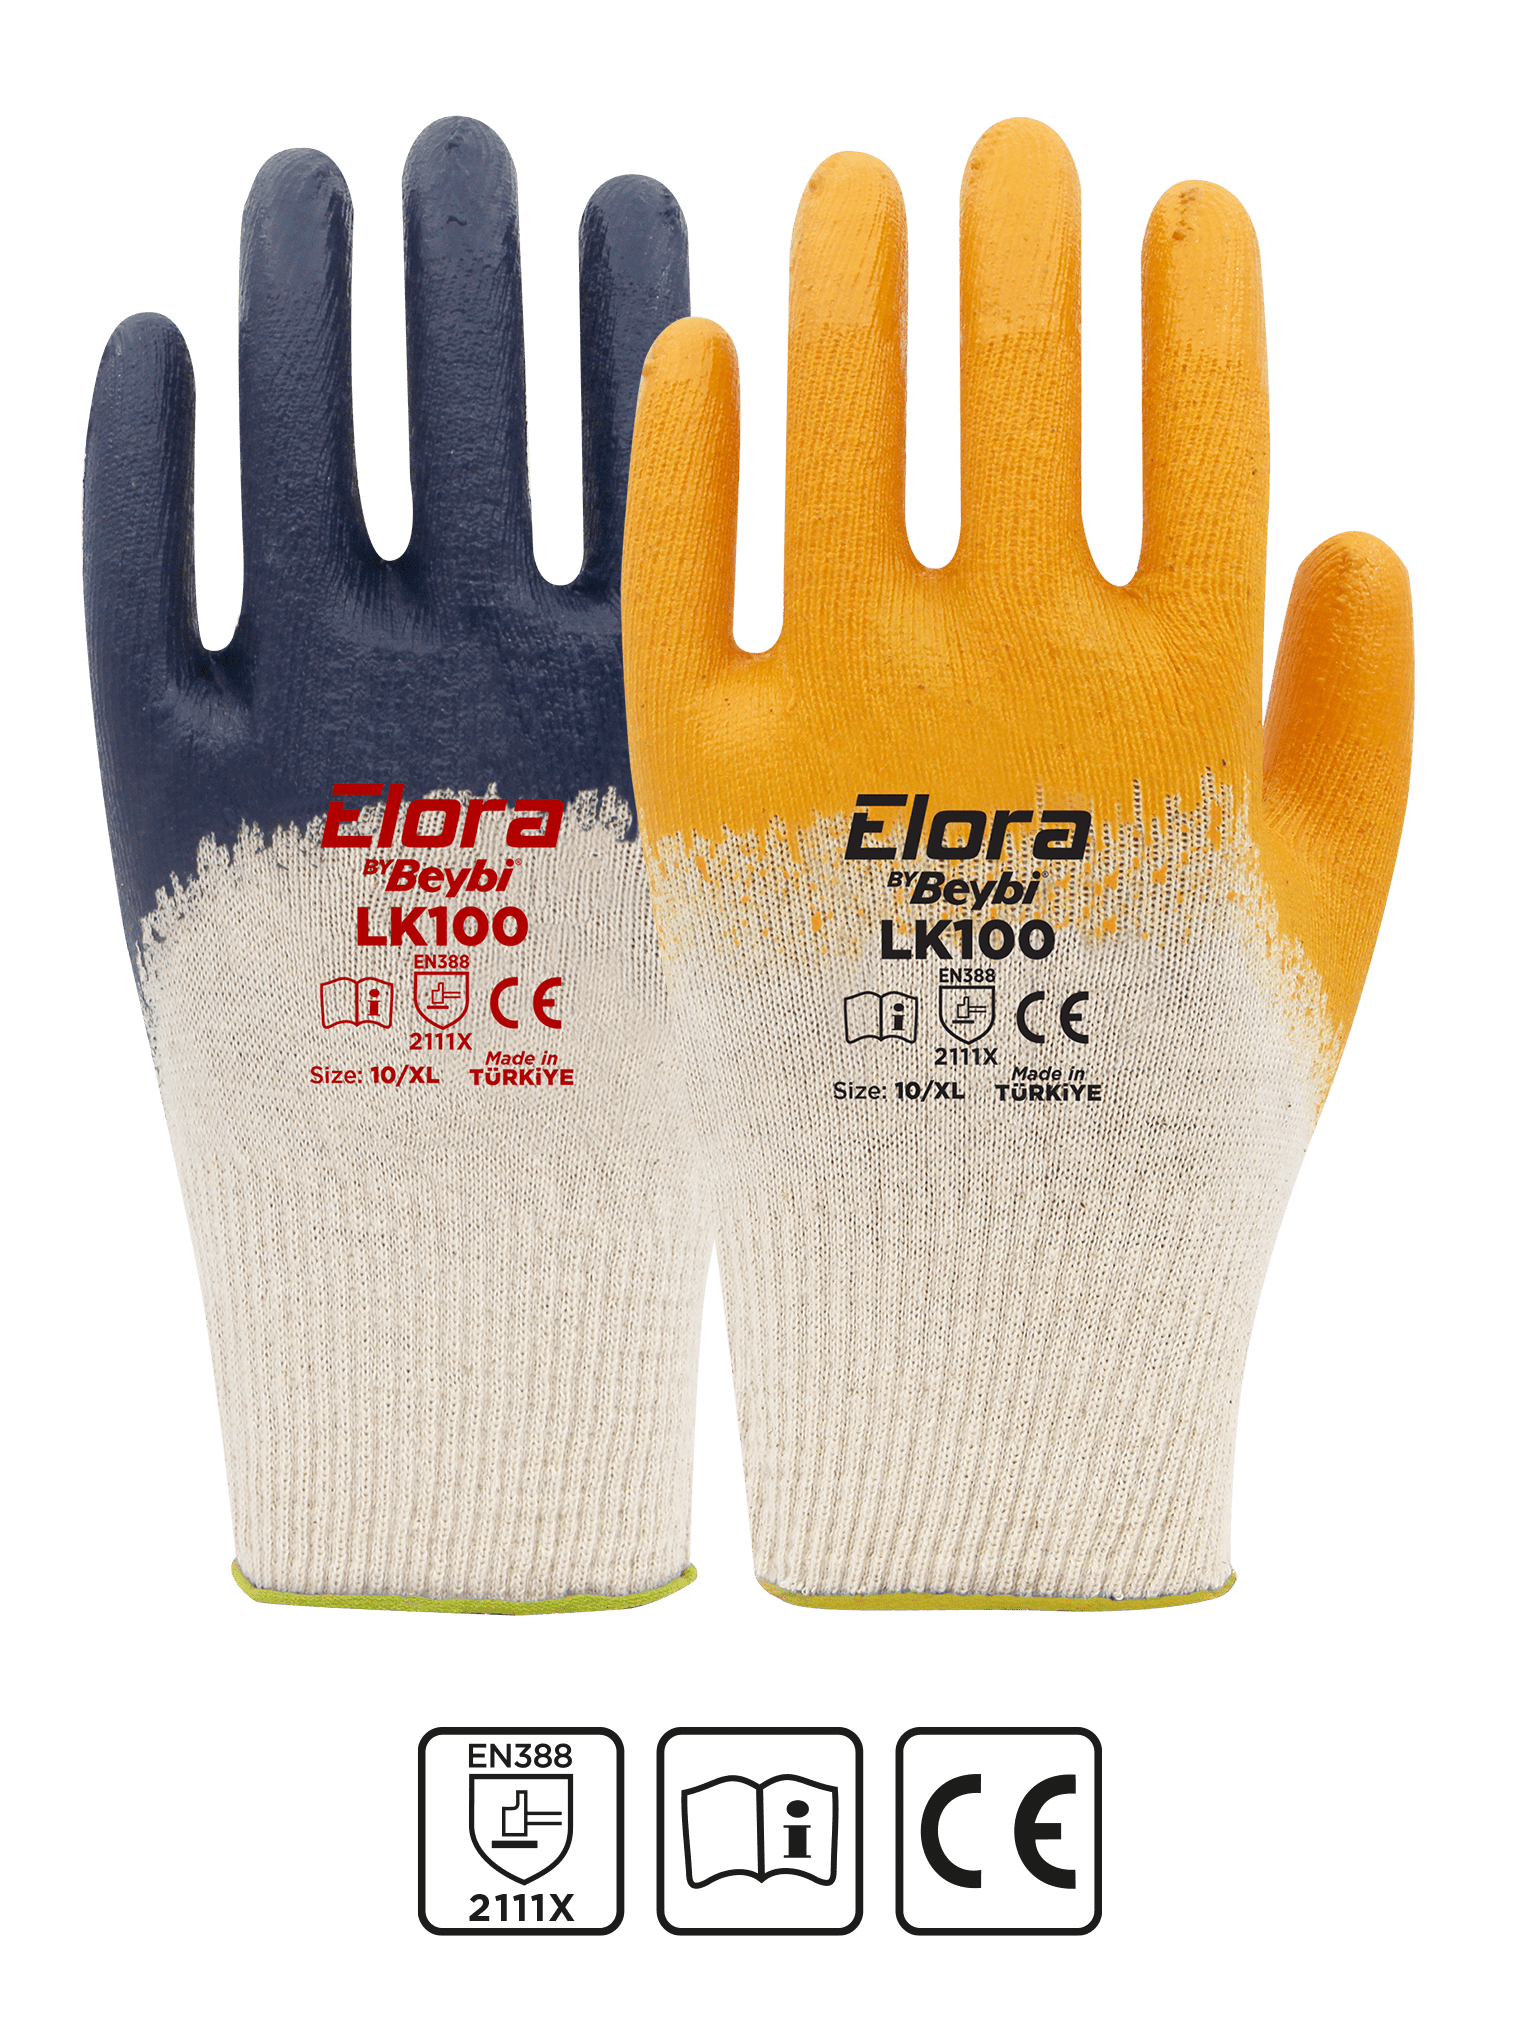 LK100 Nitrile Coated Cotton Glove